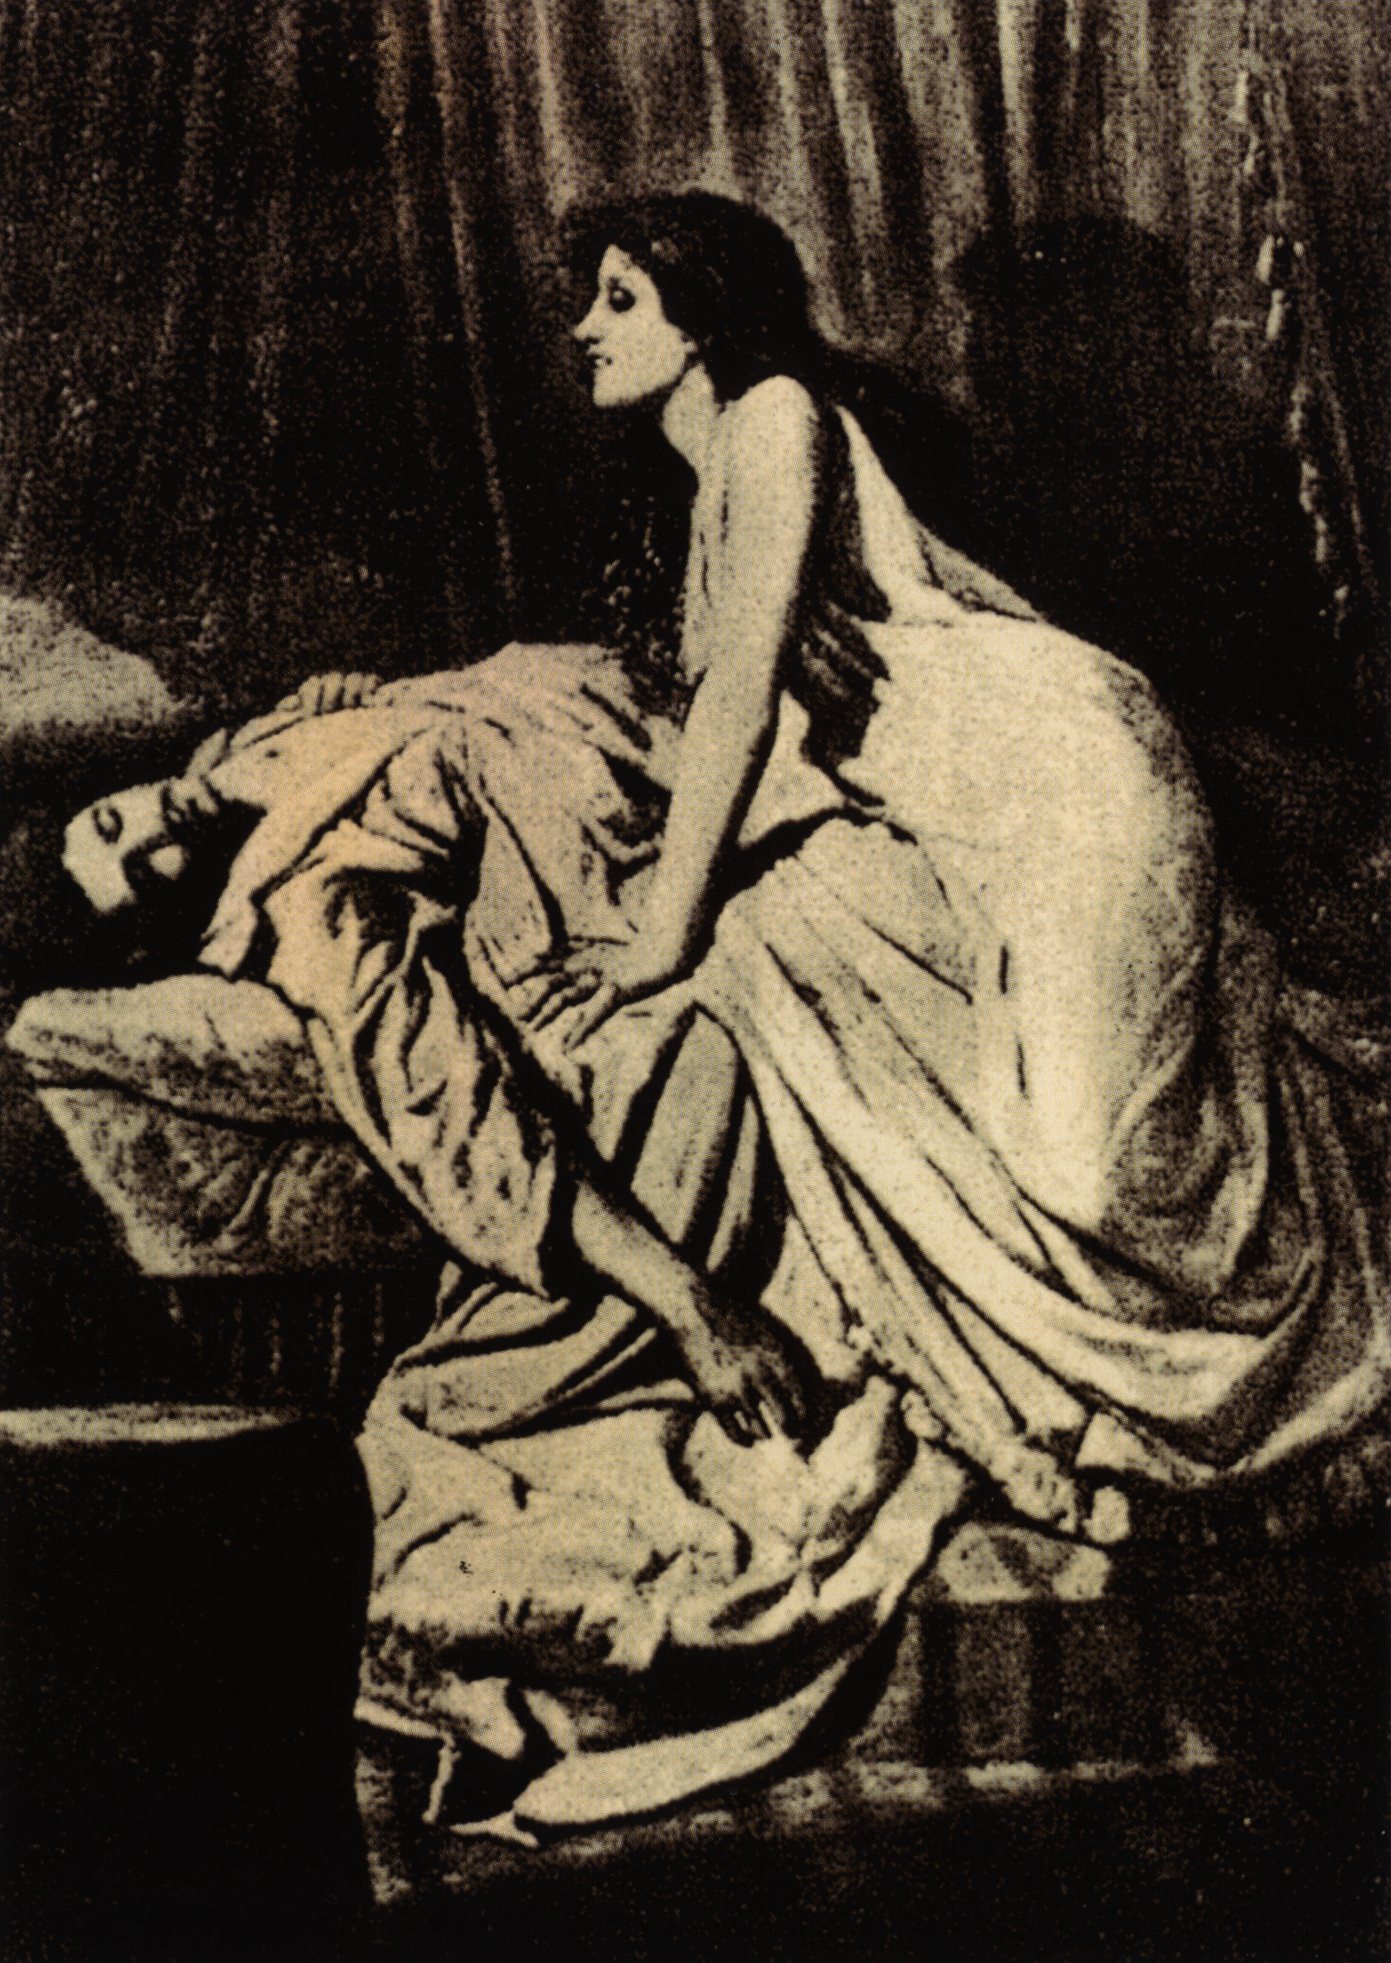 Le Vampire by Philip Burne-Jones